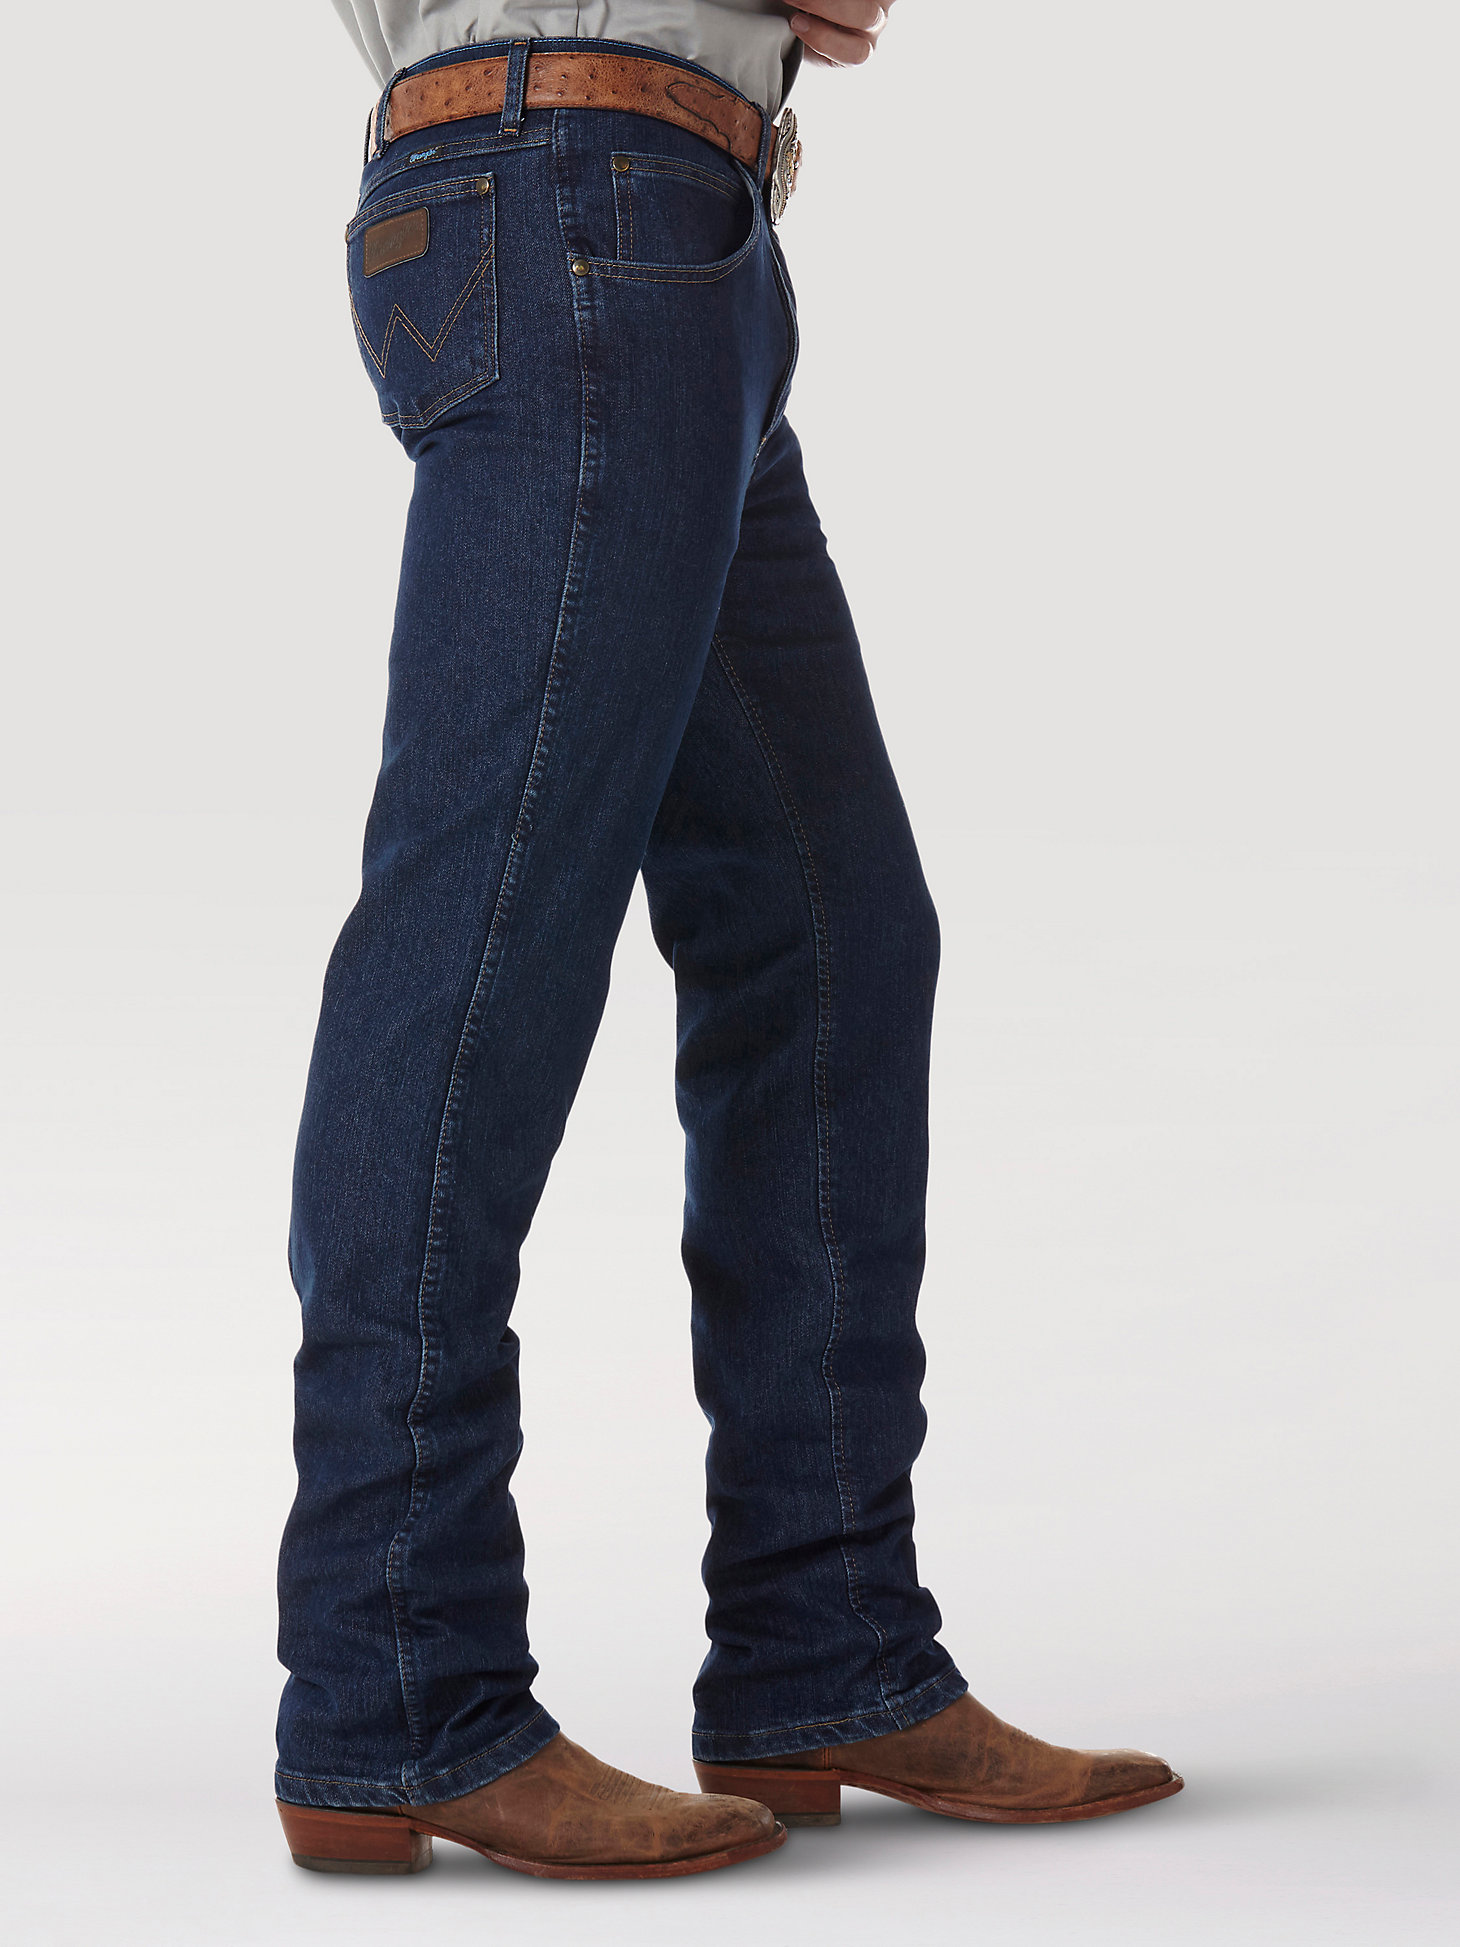 Premium Performance Cowboy Cut® Advanced Comfort Wicking Slim Fit Jean in Midnight Rinse alternative view 1